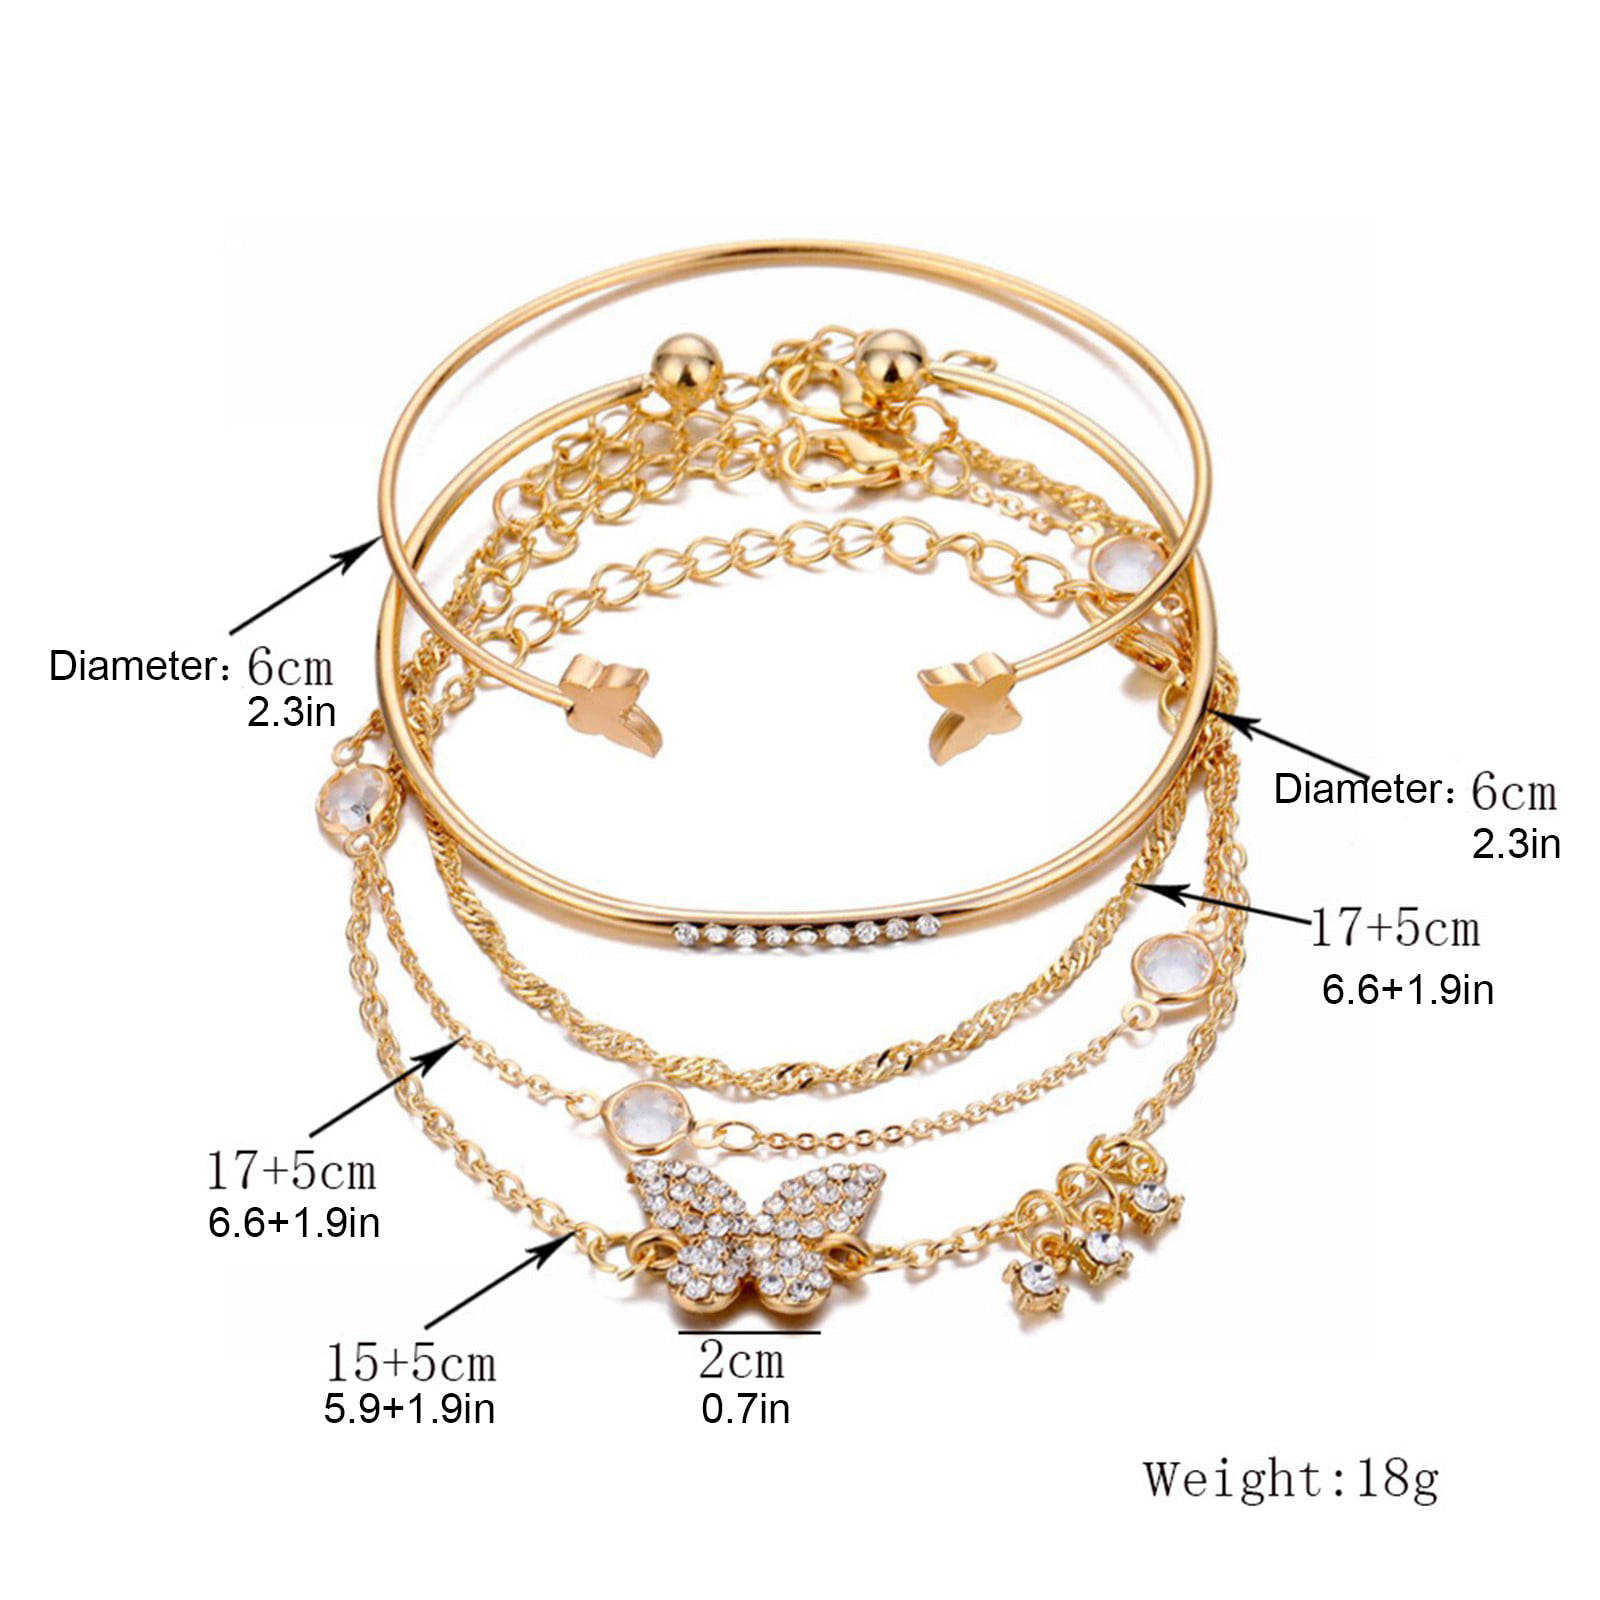 Details about   4Pcs Fashion Crystal Silver Chain Handmade Bohemian Charm Bracelet Set Jewelry 